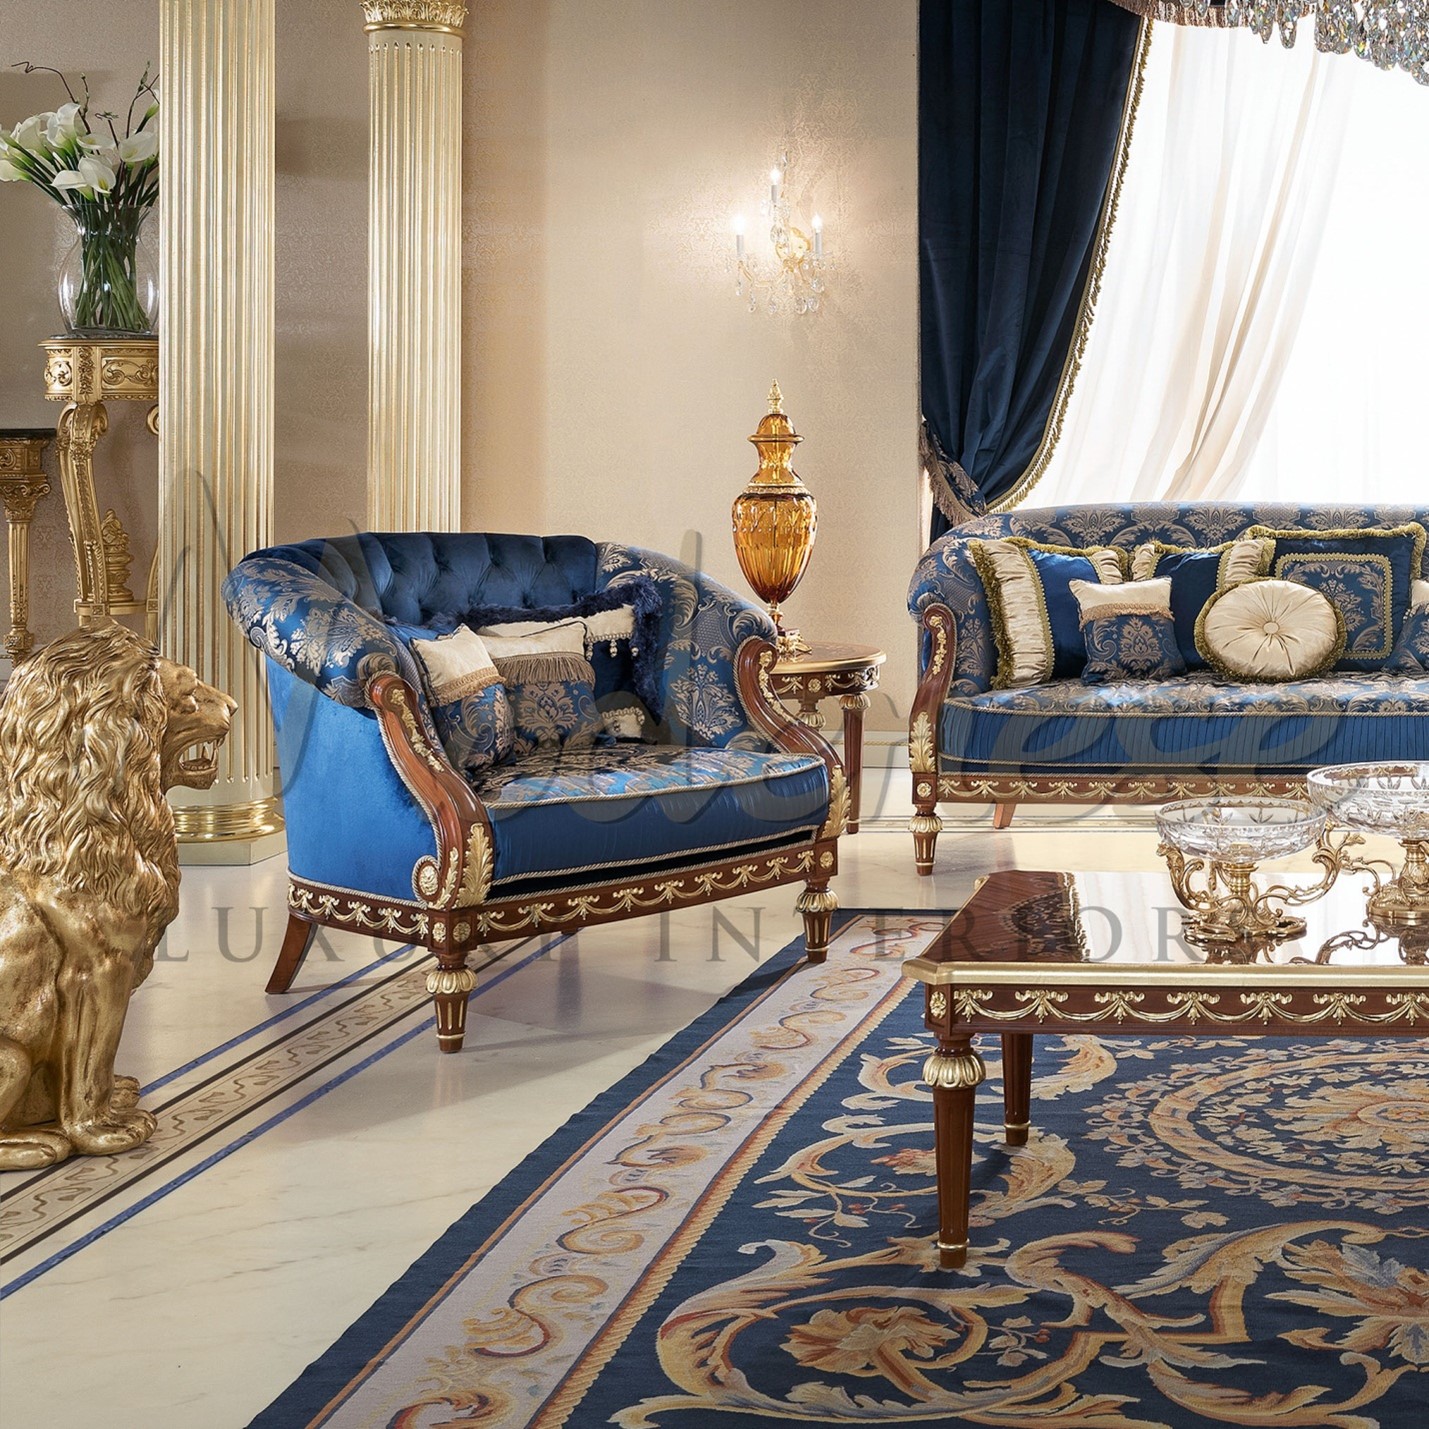 Classical Italian Furniture - A Luxurious Interior Element